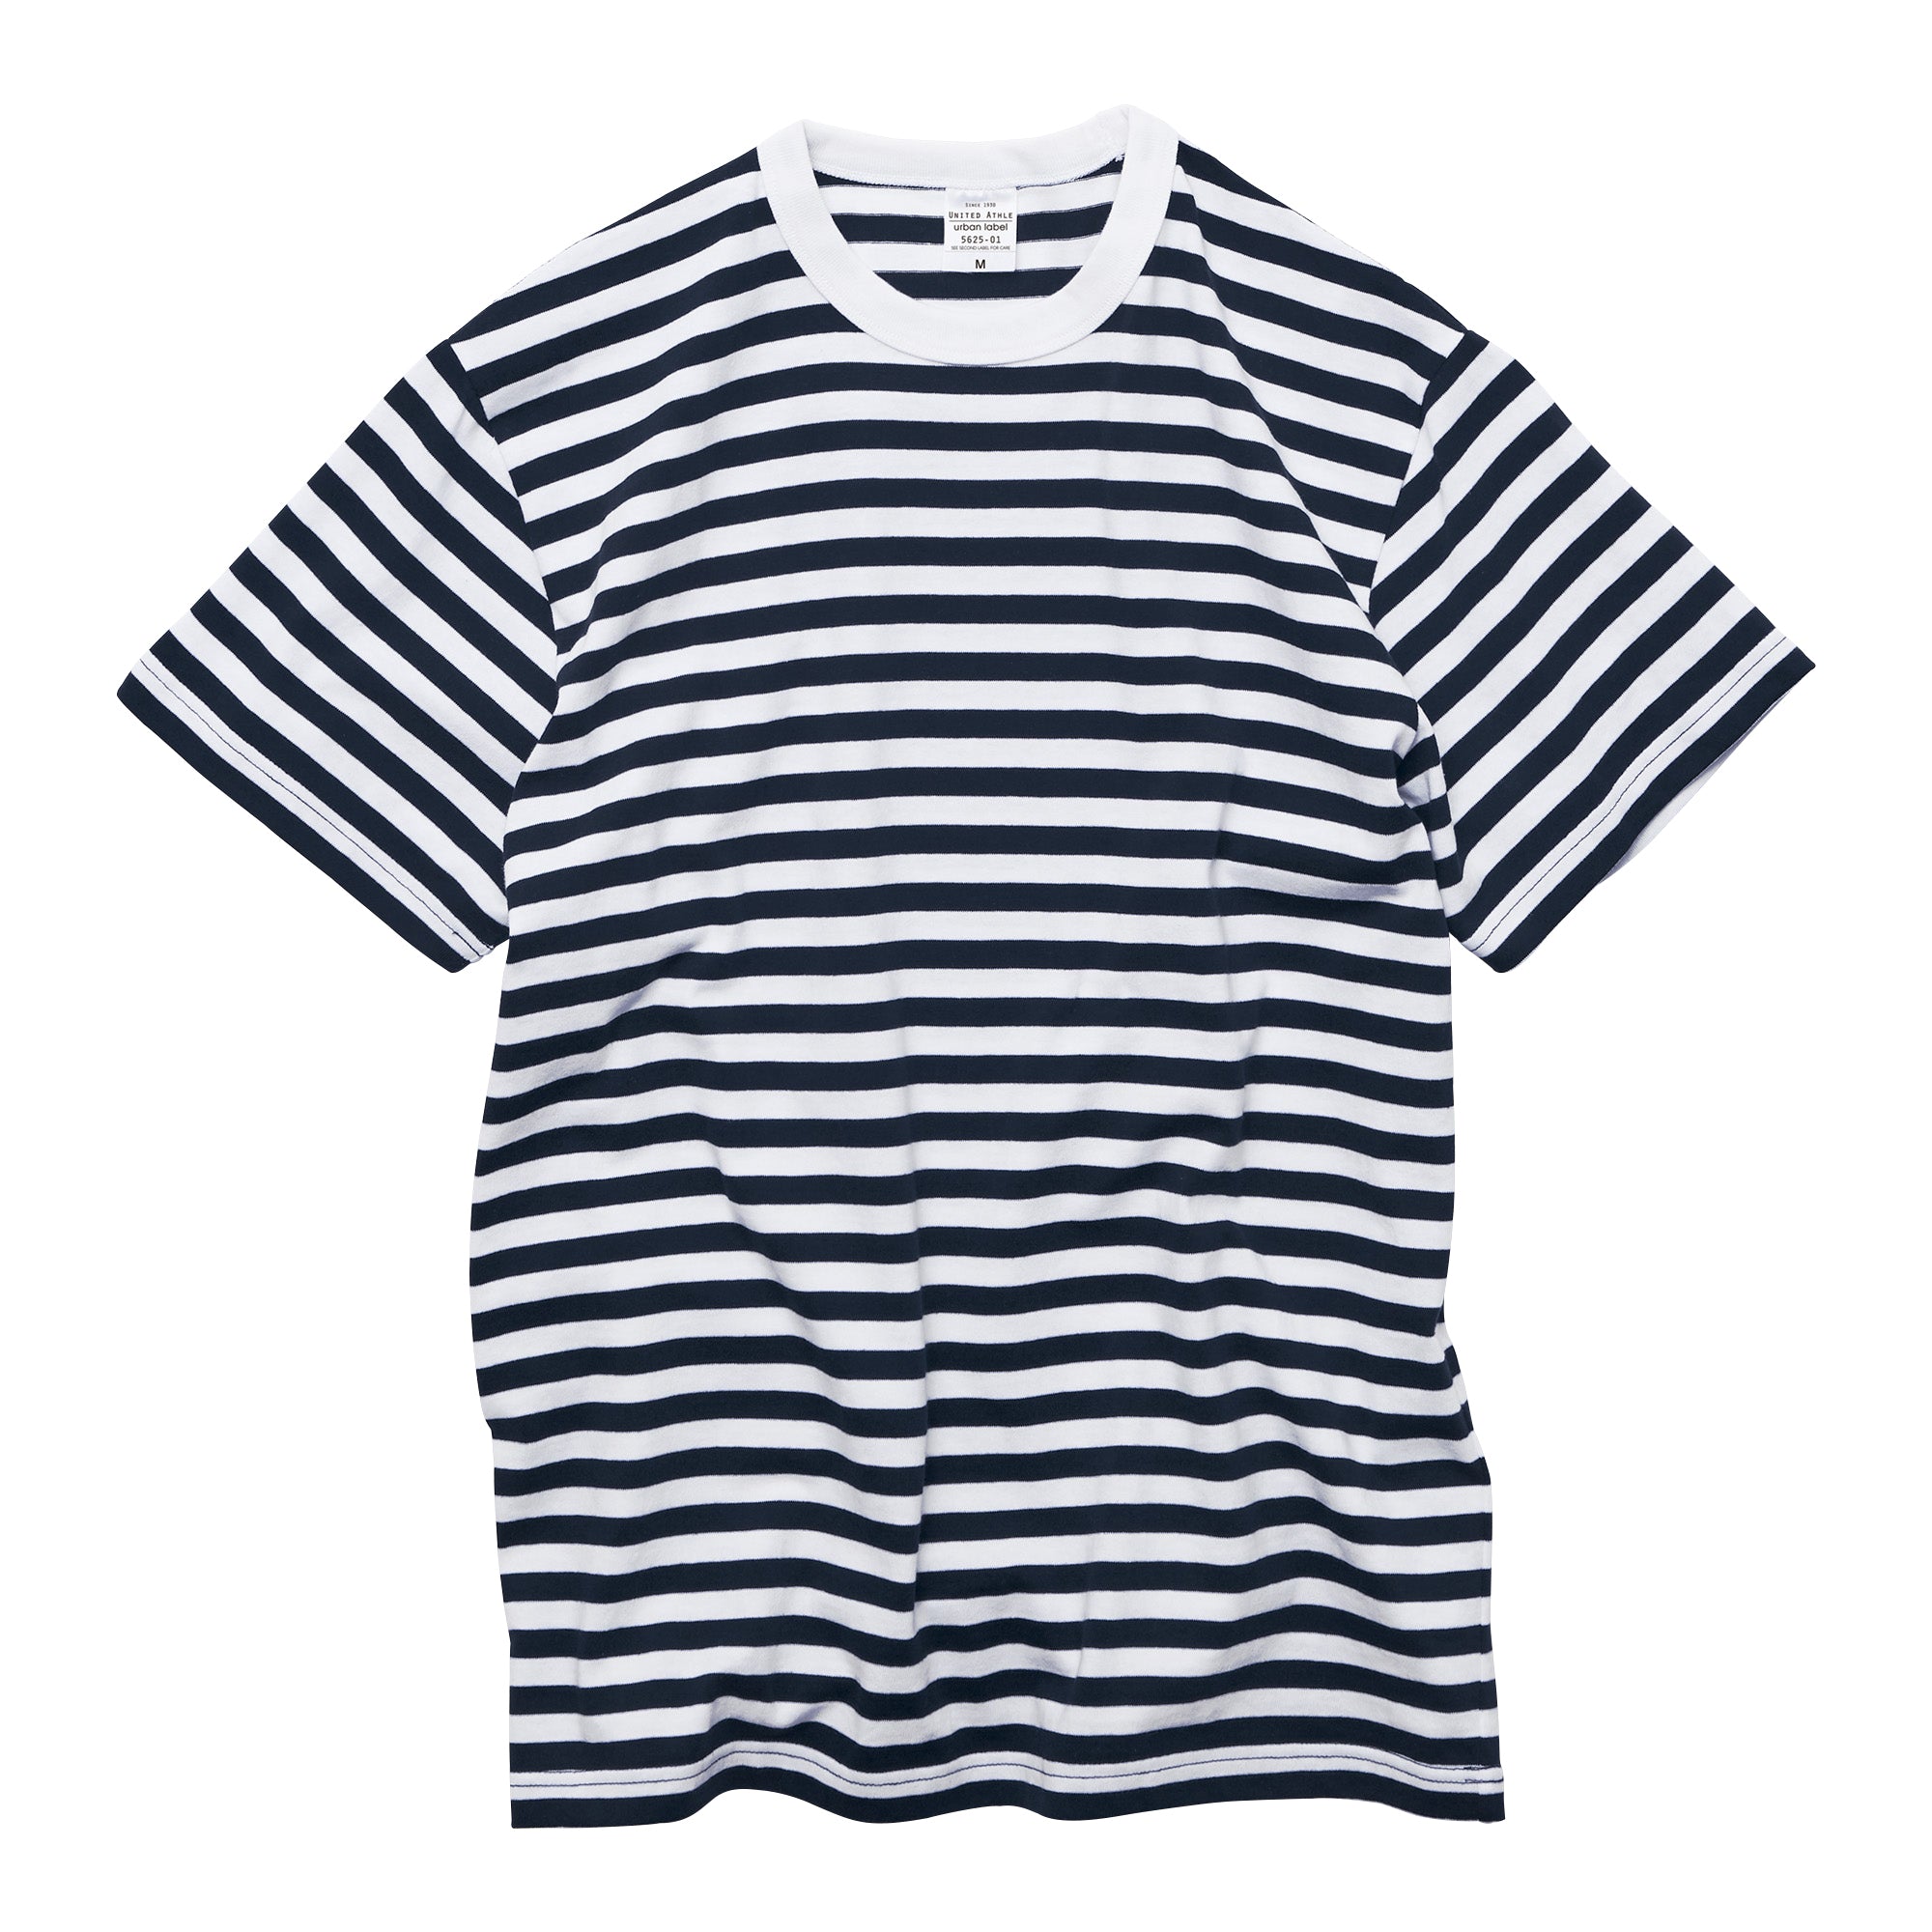 5625 - Classic Stripe Tee - Navy White